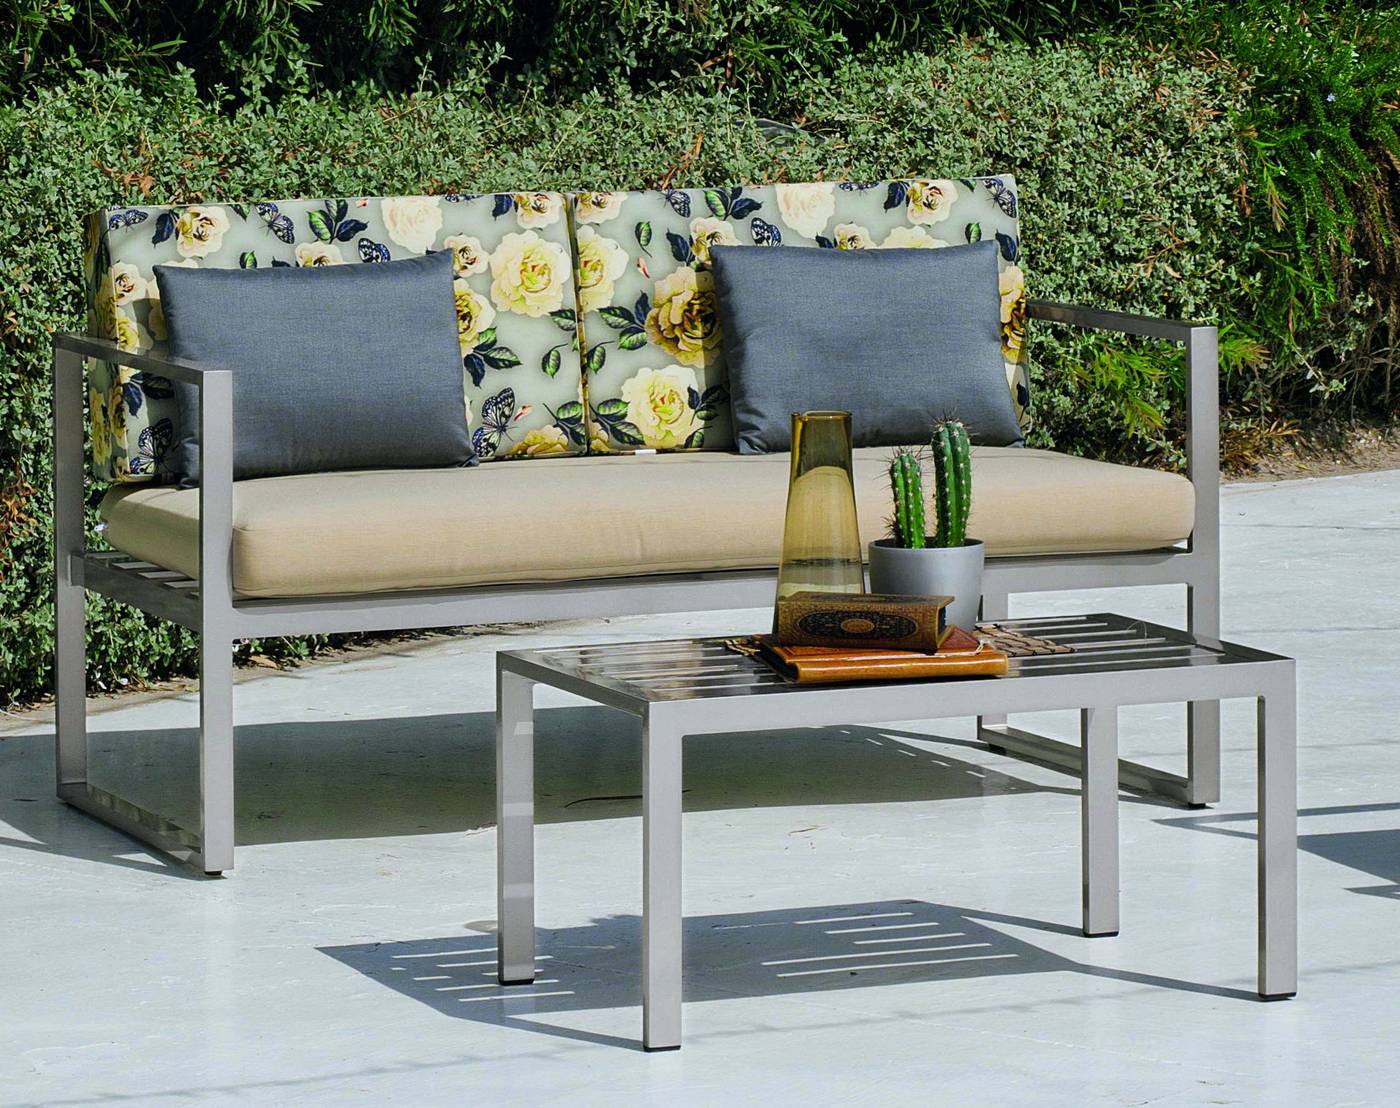 Set Aluminio Martinique-7 - Conjunto aluminio : 1 sofá de 2 plazas + 2 sillones + 1 mesa de centro + cojines. Disponible en color blanco, champagne, bronce o antracita.